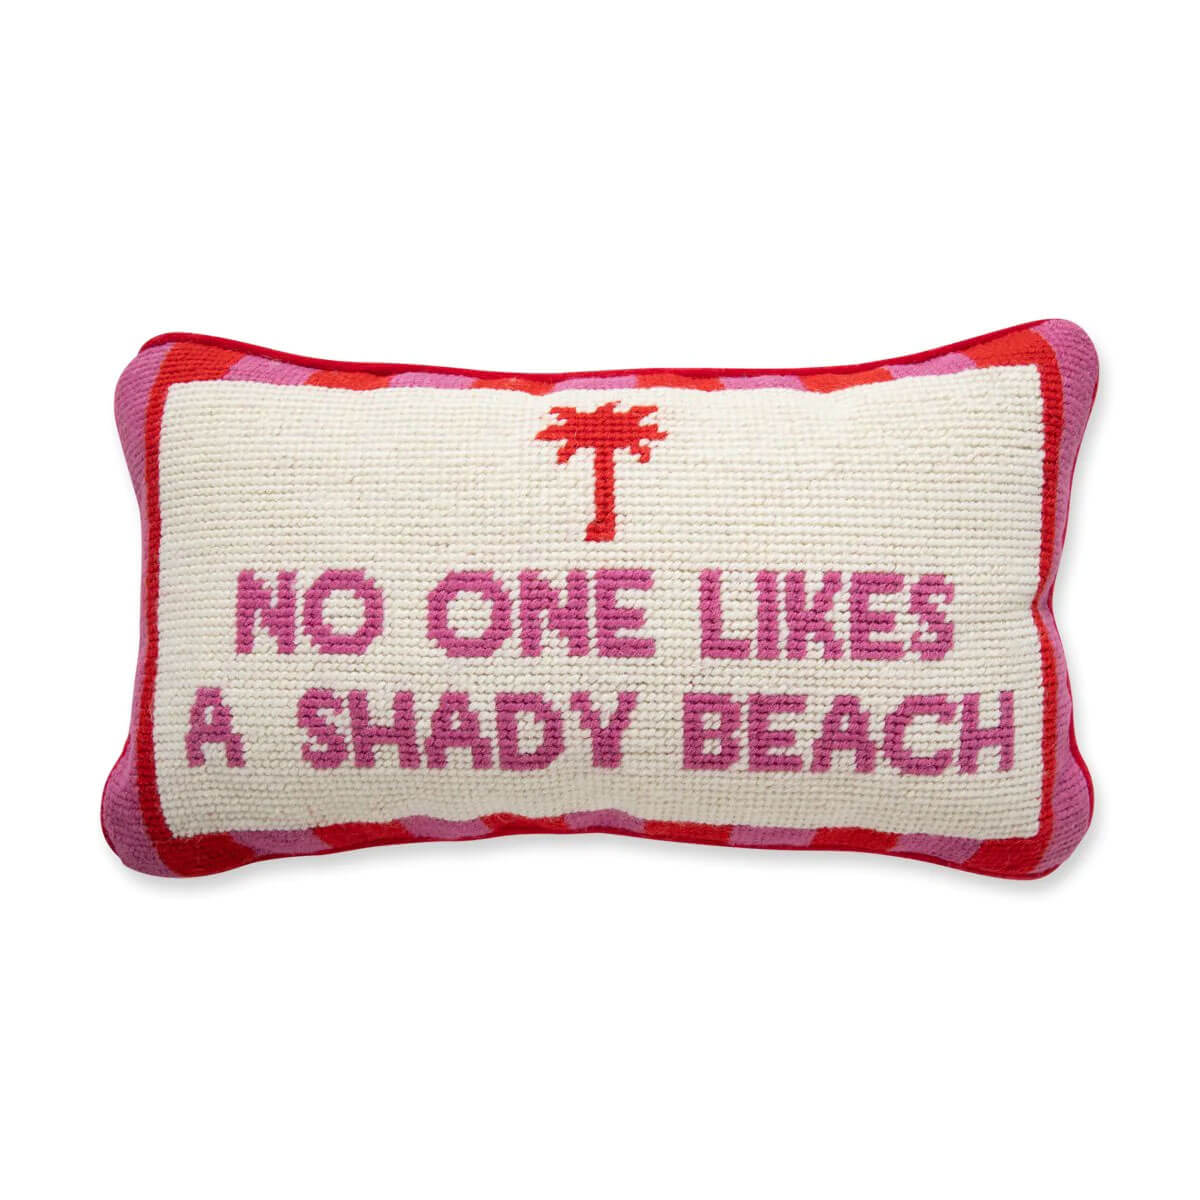 Furbish Studio Shady Beach Needlepoint Pillow front 